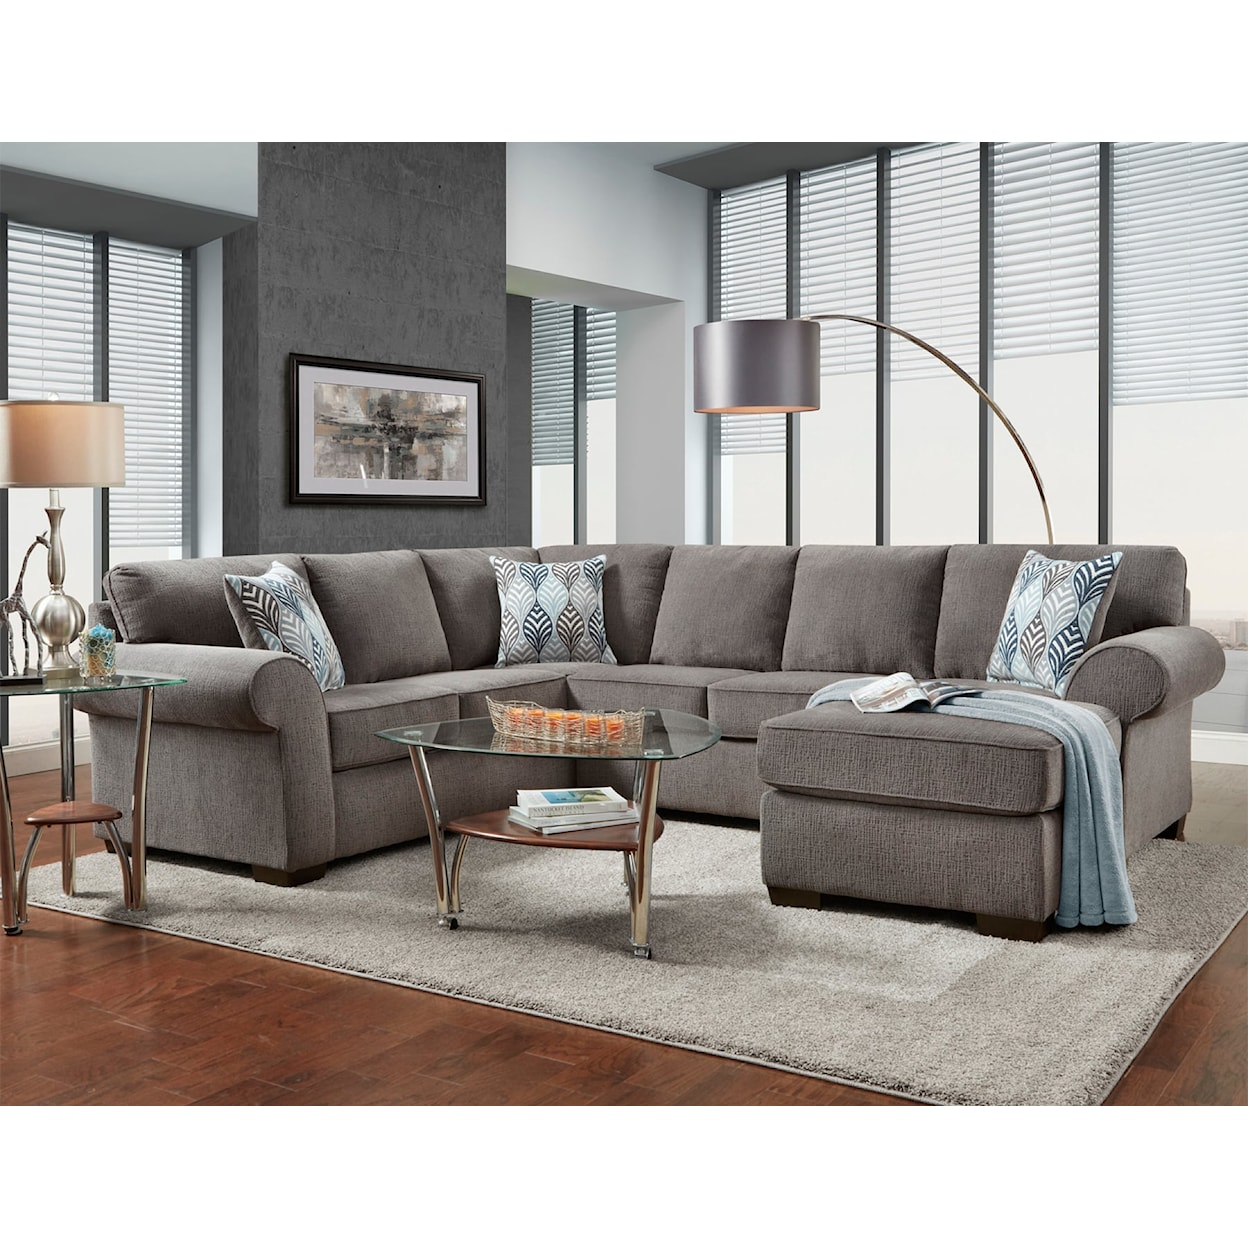 Affordable Furniture 3050 Charisma Smoke Sectional Sofas